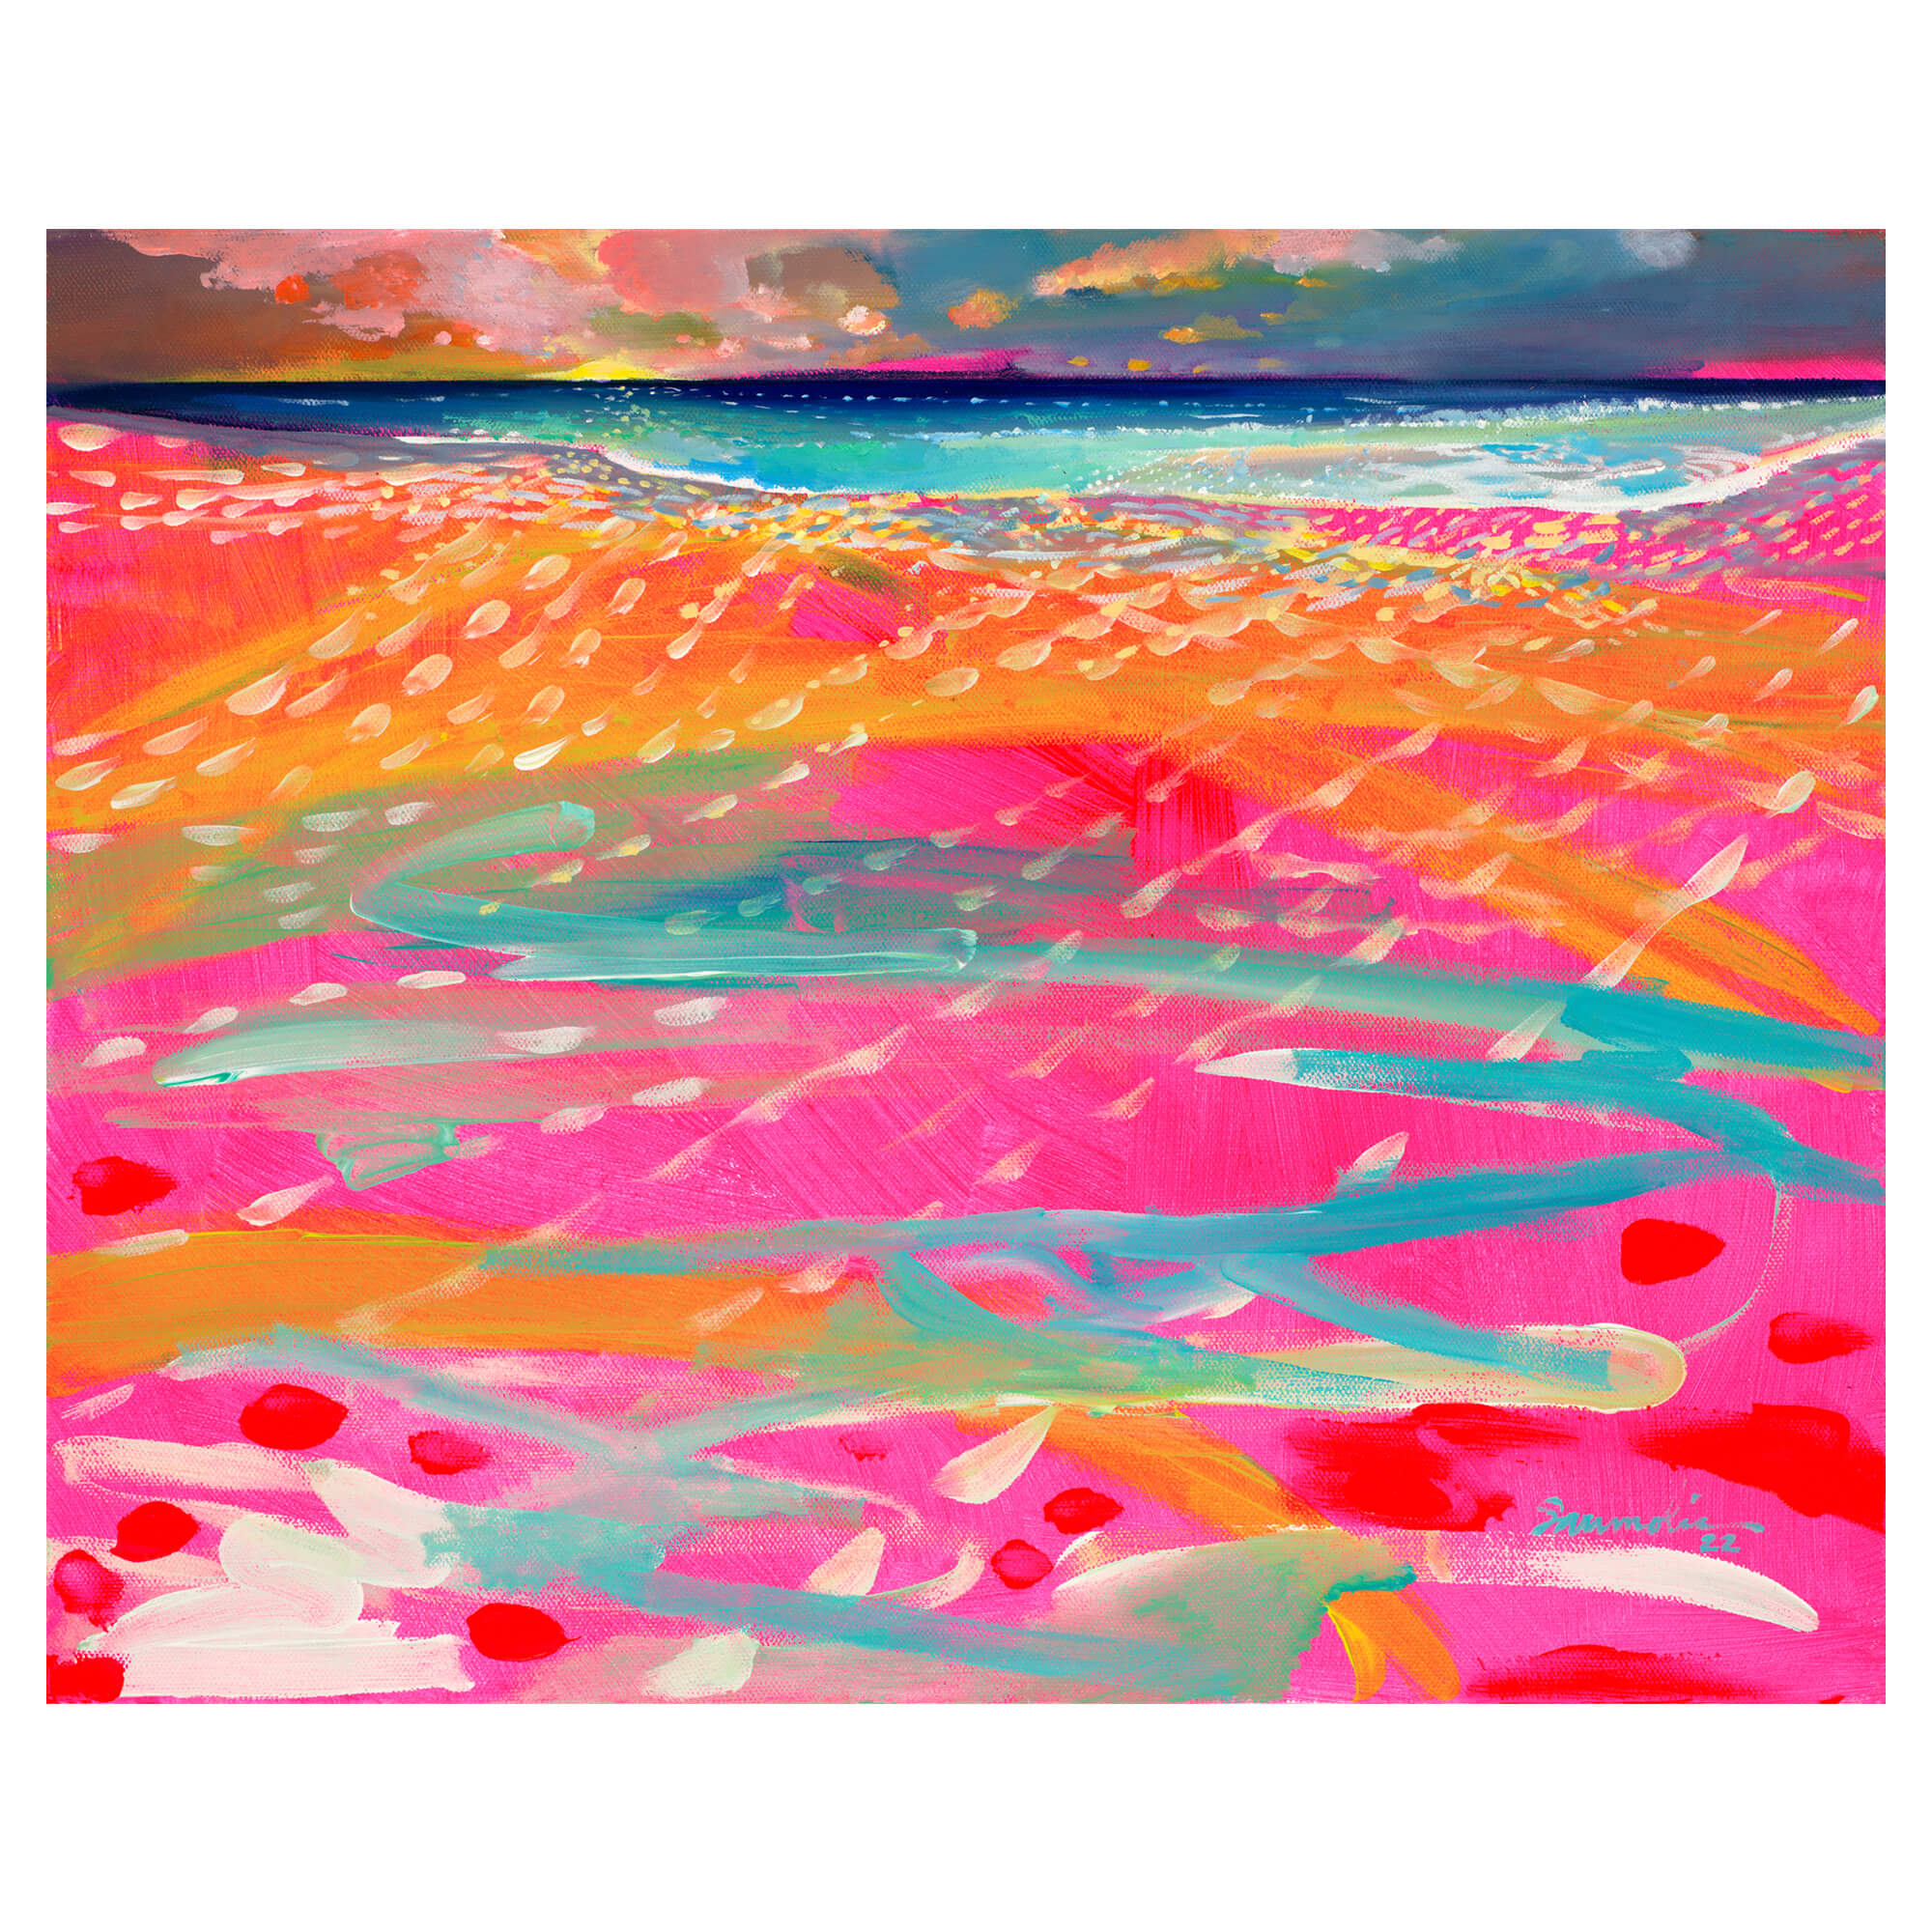 A canvas giclée art print featuring this beautiful vibrant neon-colored seascape by popular Hawaii artist Saumolia Puapuaga